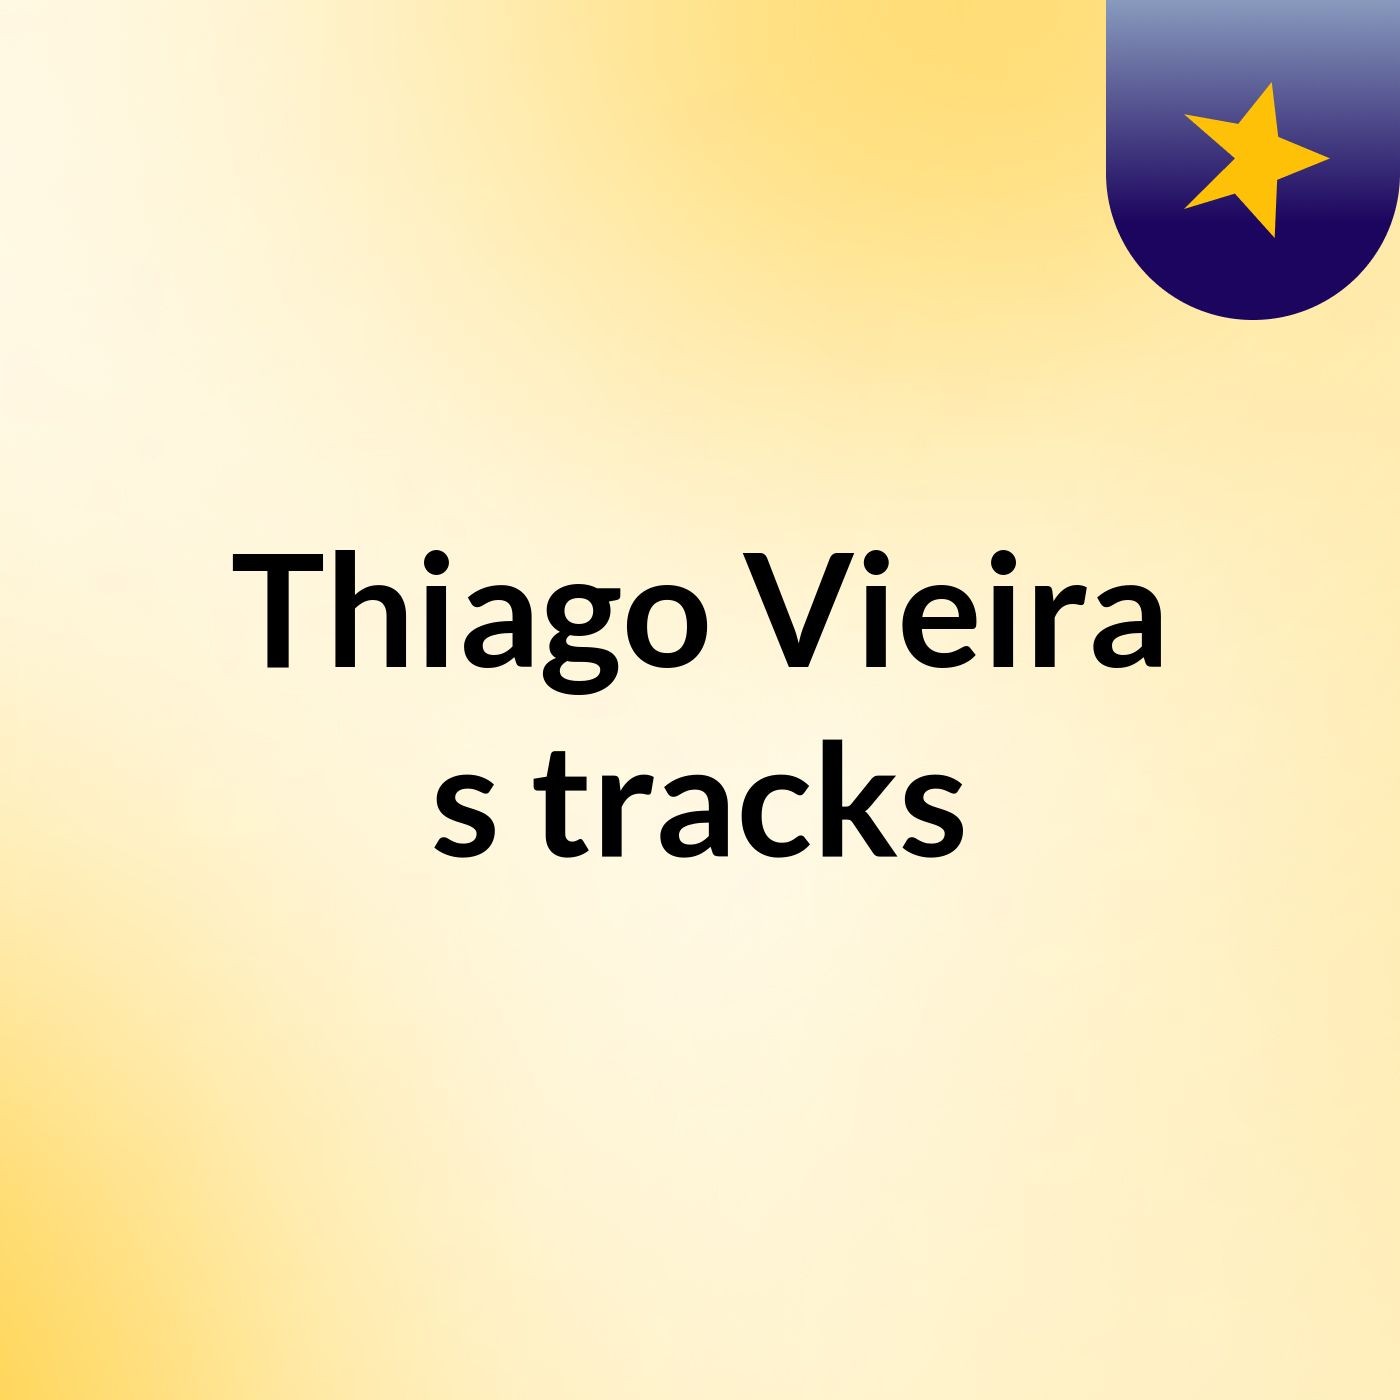 Thiago Vieira's tracks